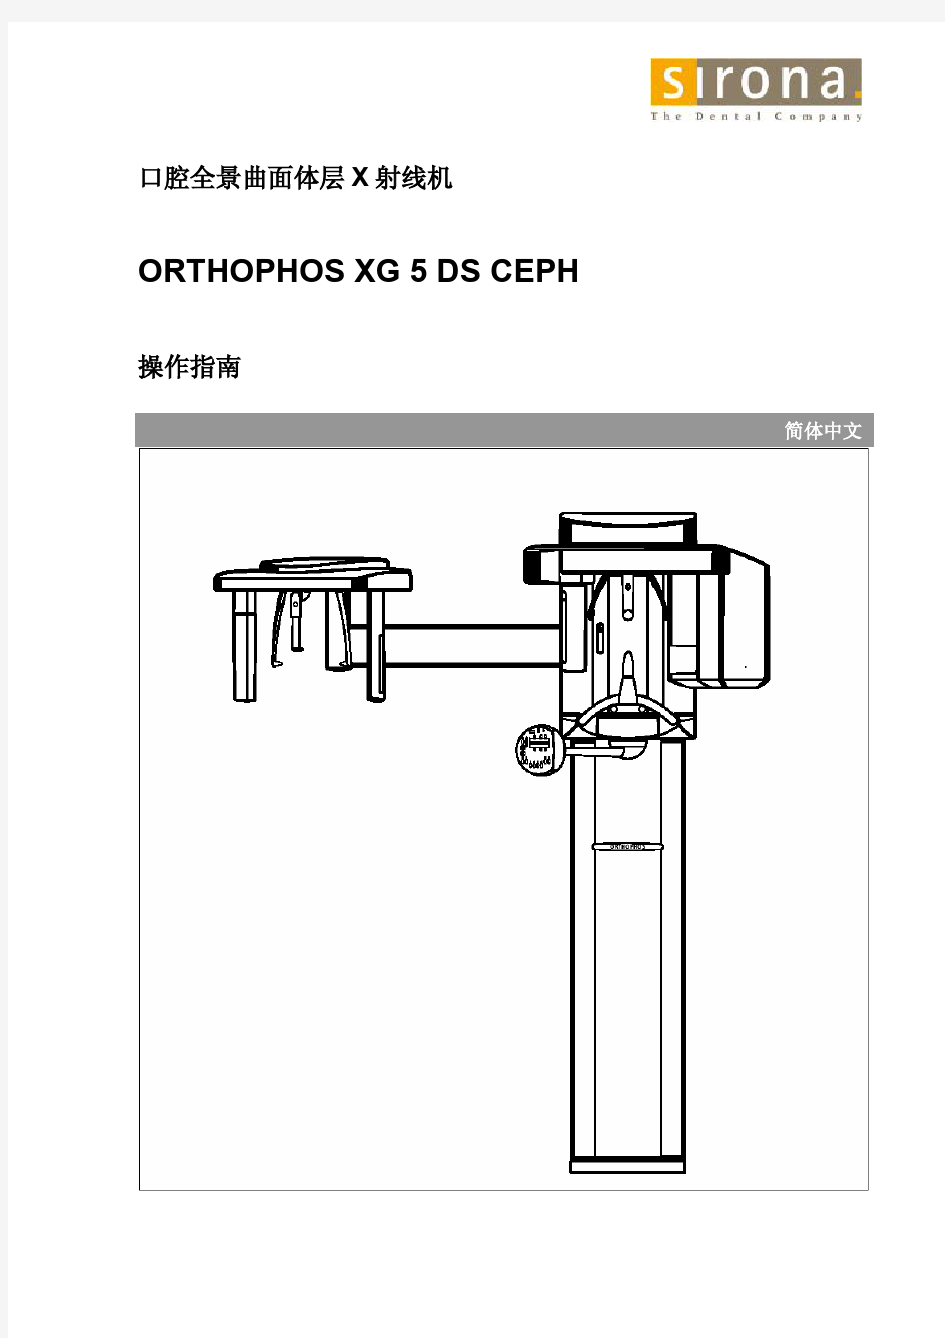 ORTHOPHOS XG 5 DS CEPH